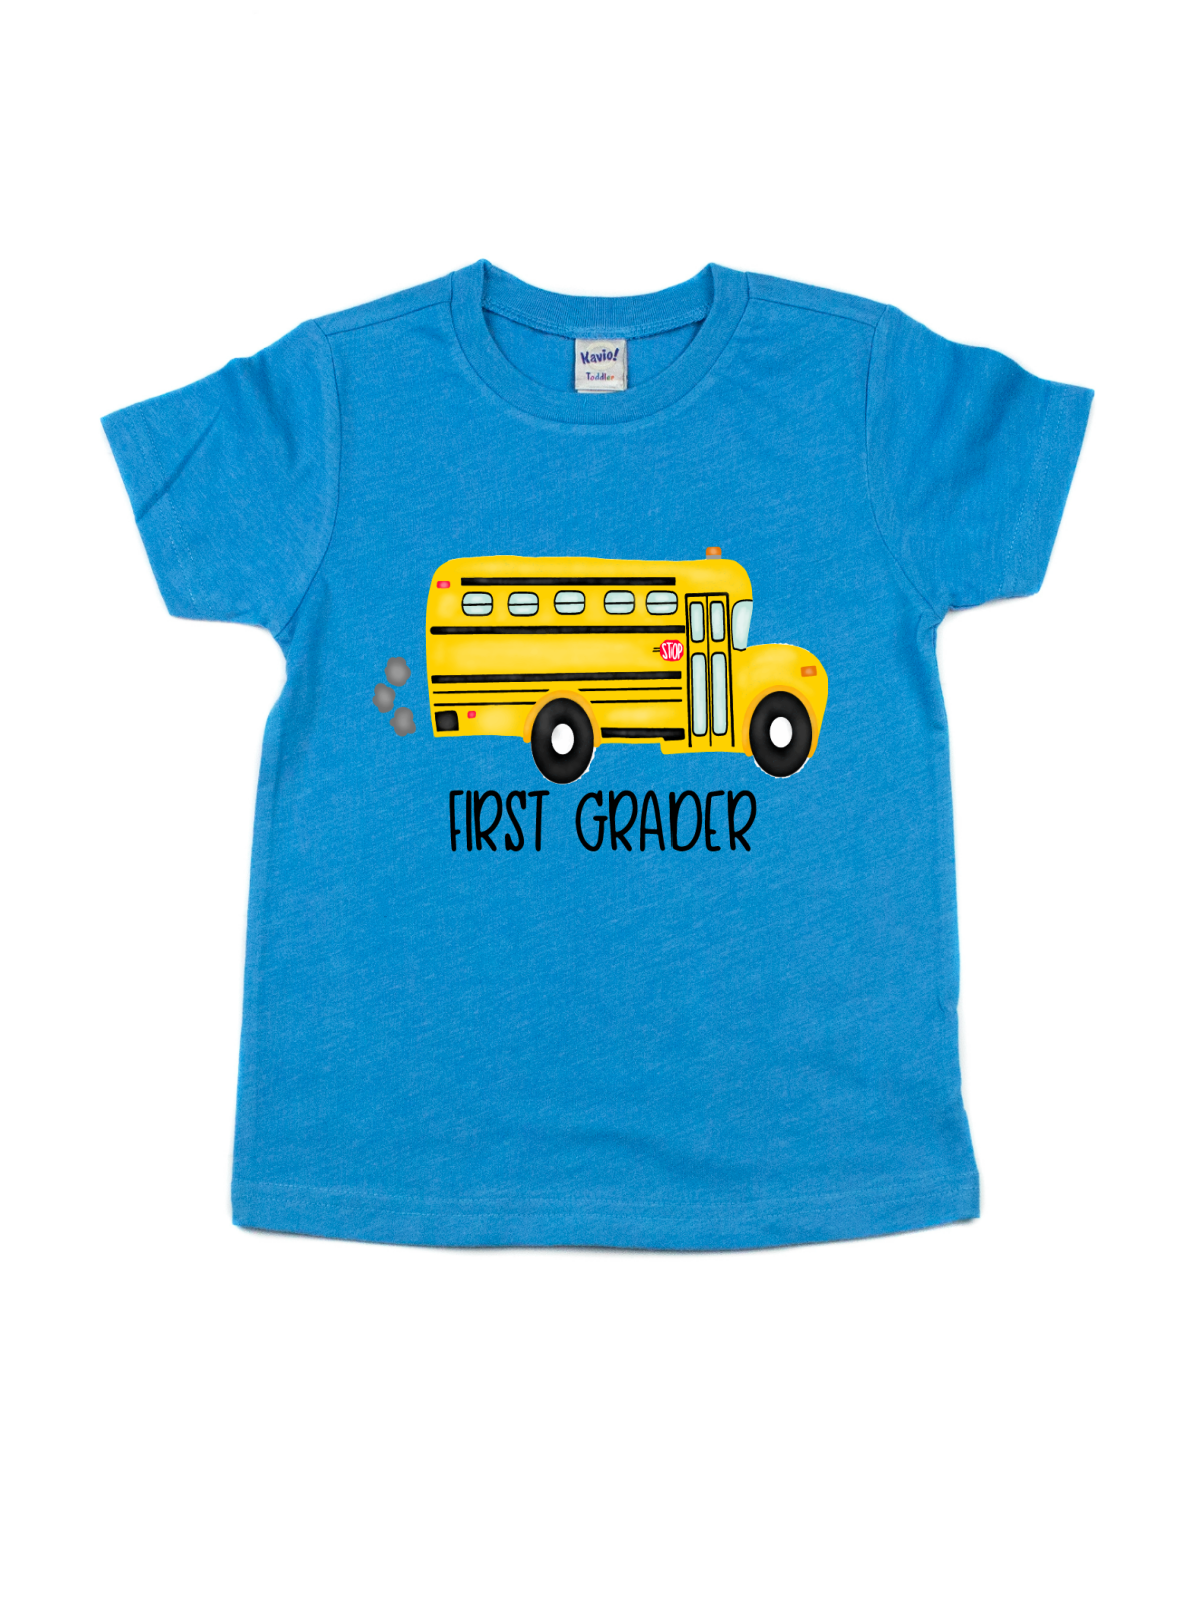 personalized yellow school bus shirt